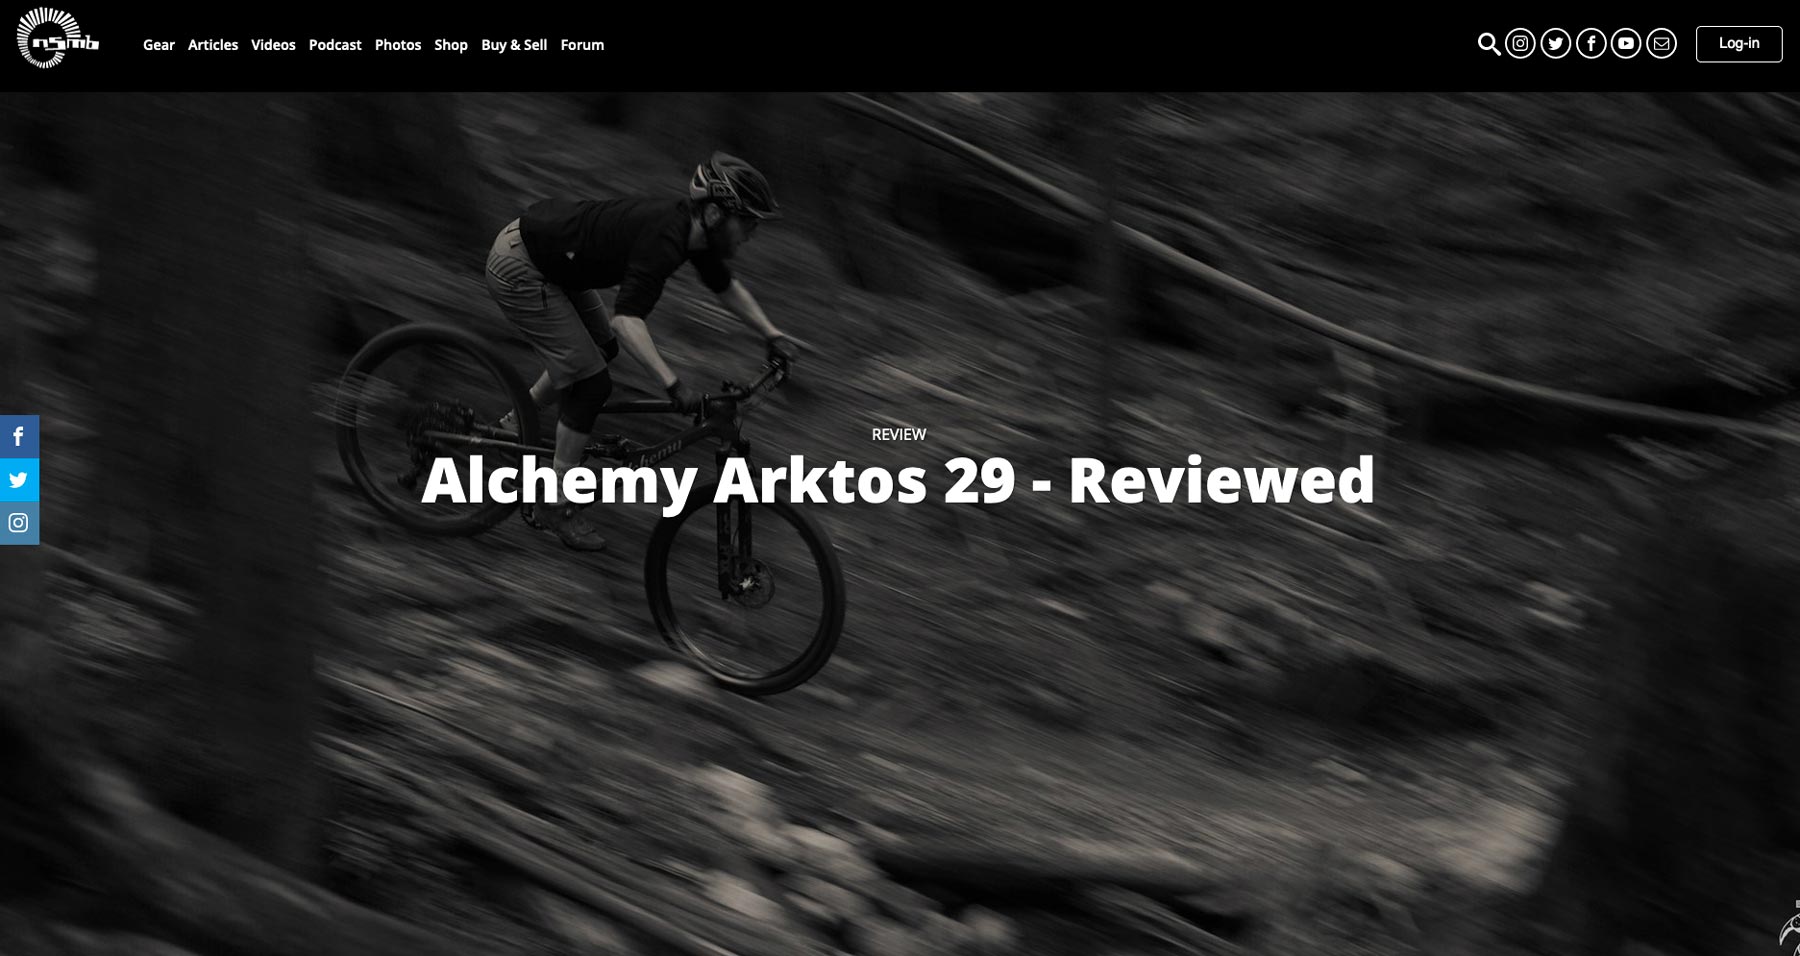 NSMB Rides the Alchemy Arktos 29